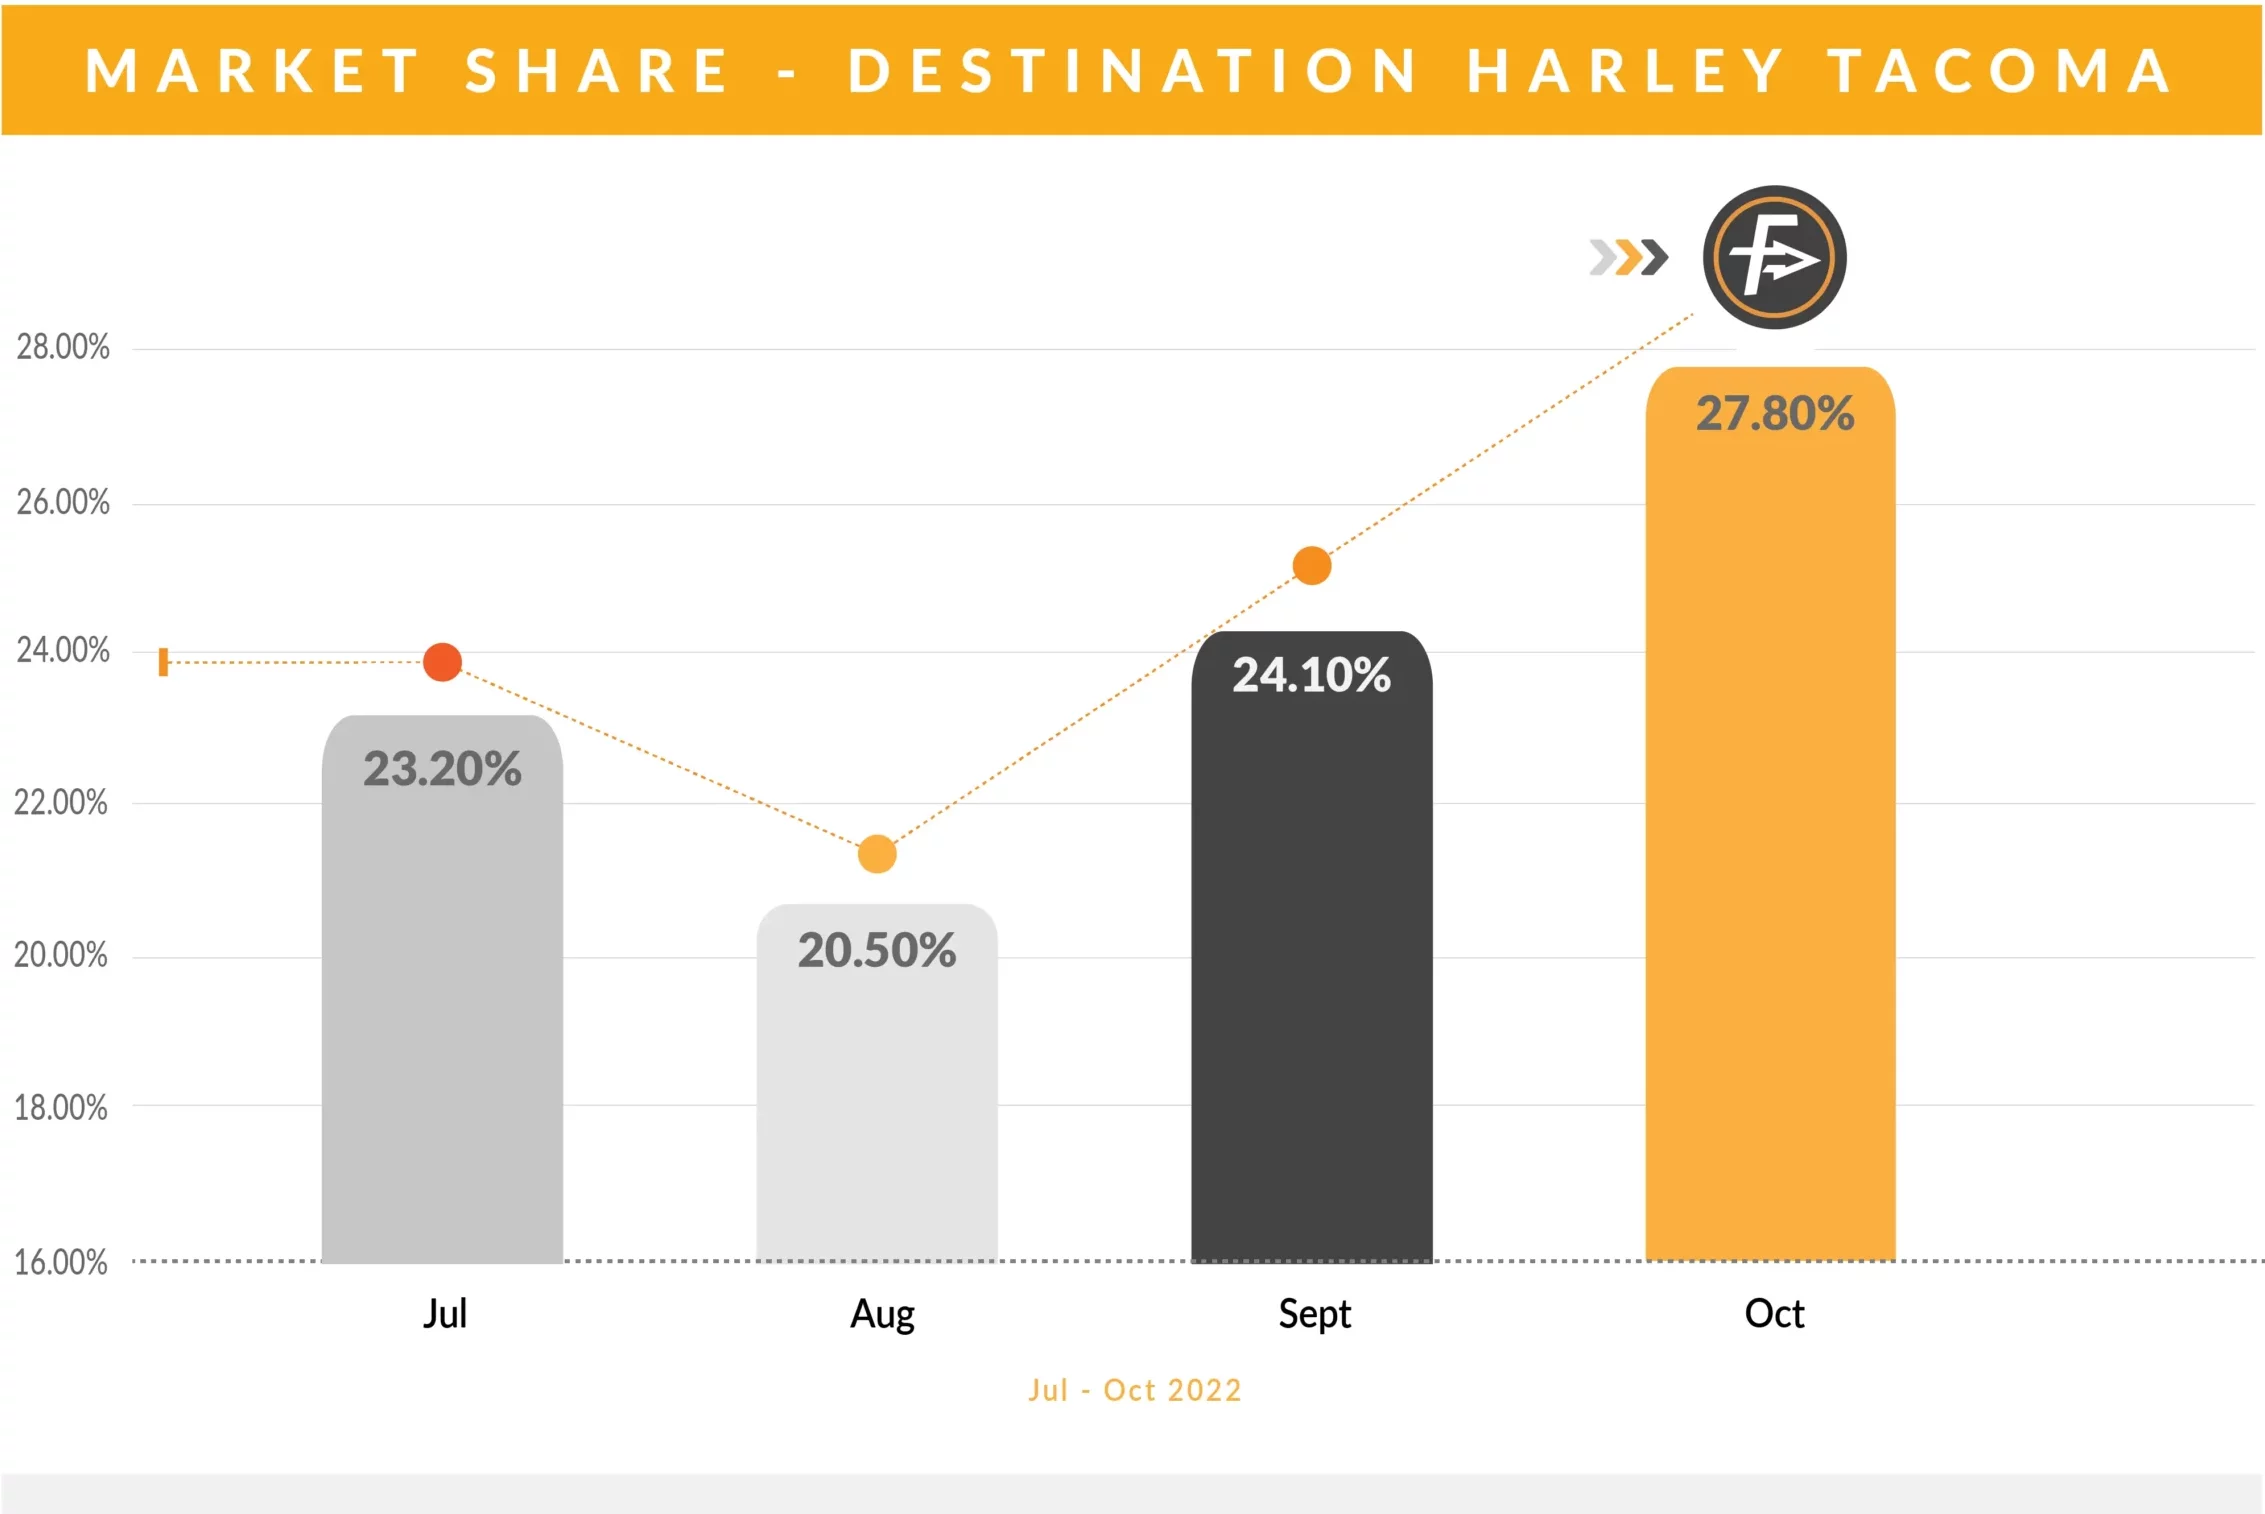 FF Market Share - Destination Harley Tacoma (1)